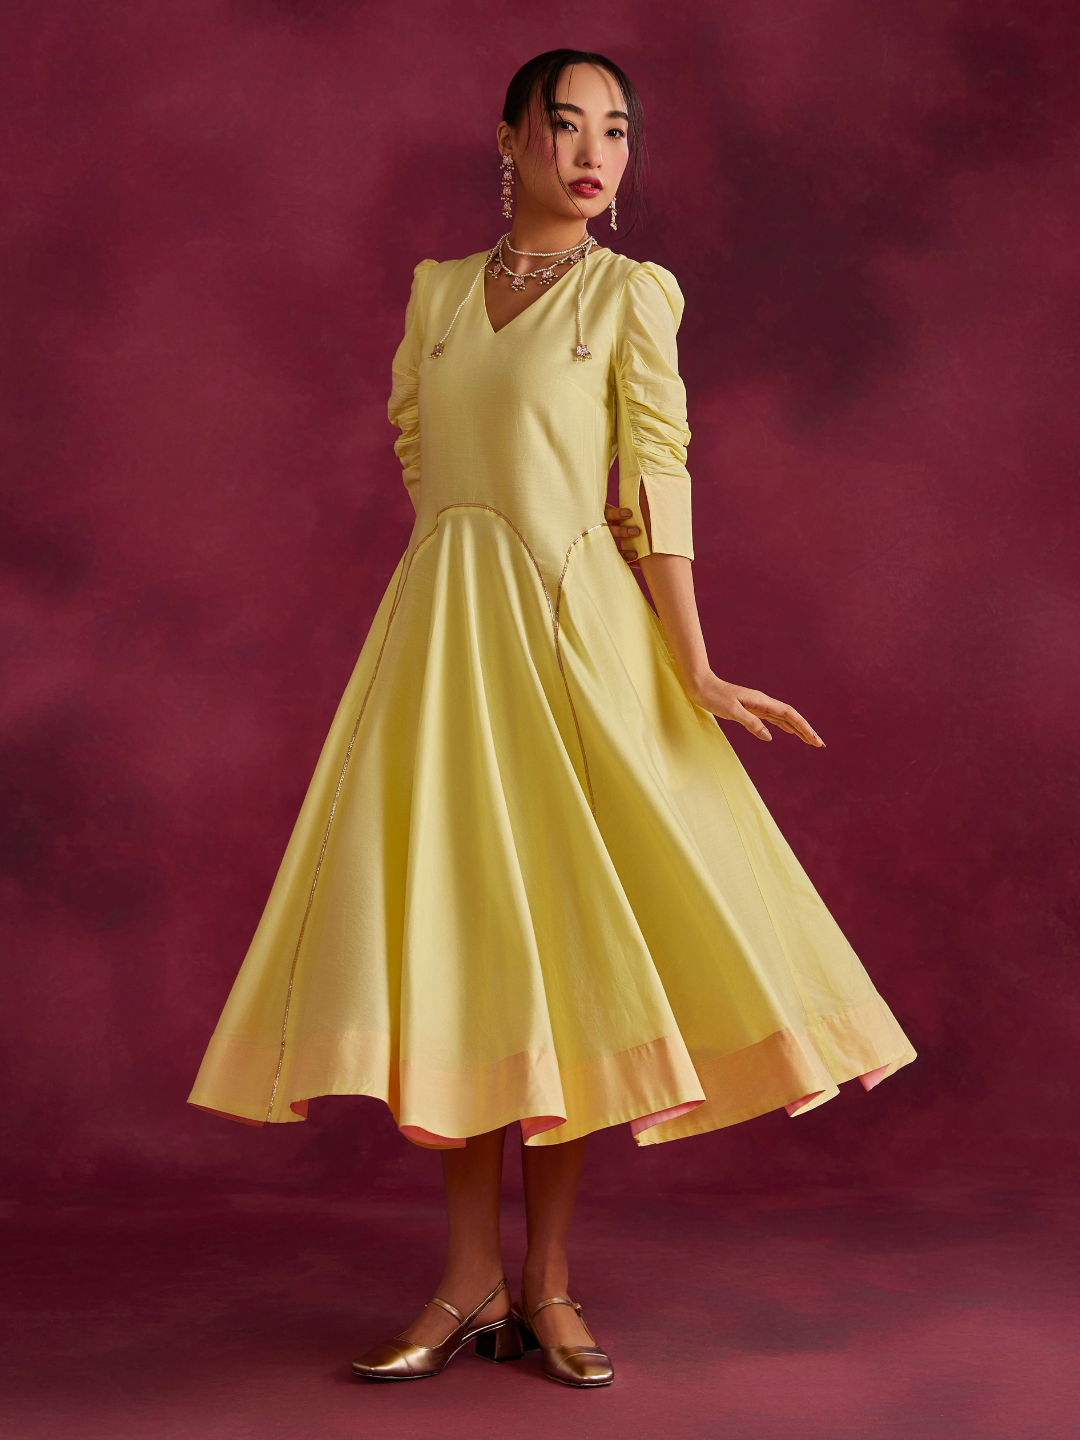 Circular Panelled Dress Highlighted With Gota Patti- Lemon yellow